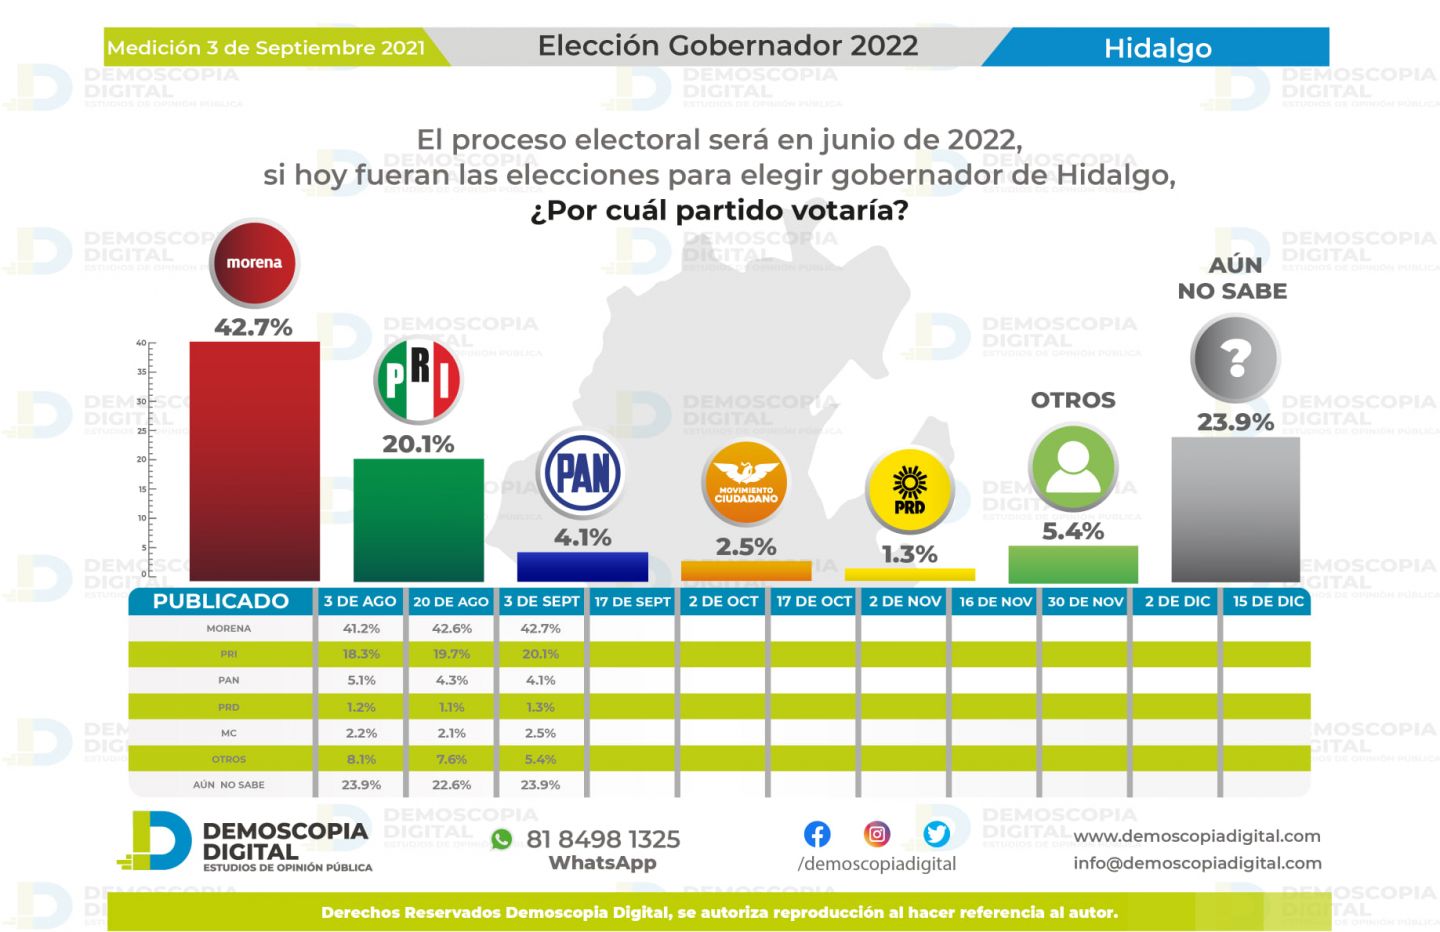 Aventaja Morena por 30 puntos al PRI en Hidalgo: Demoscopia Digital